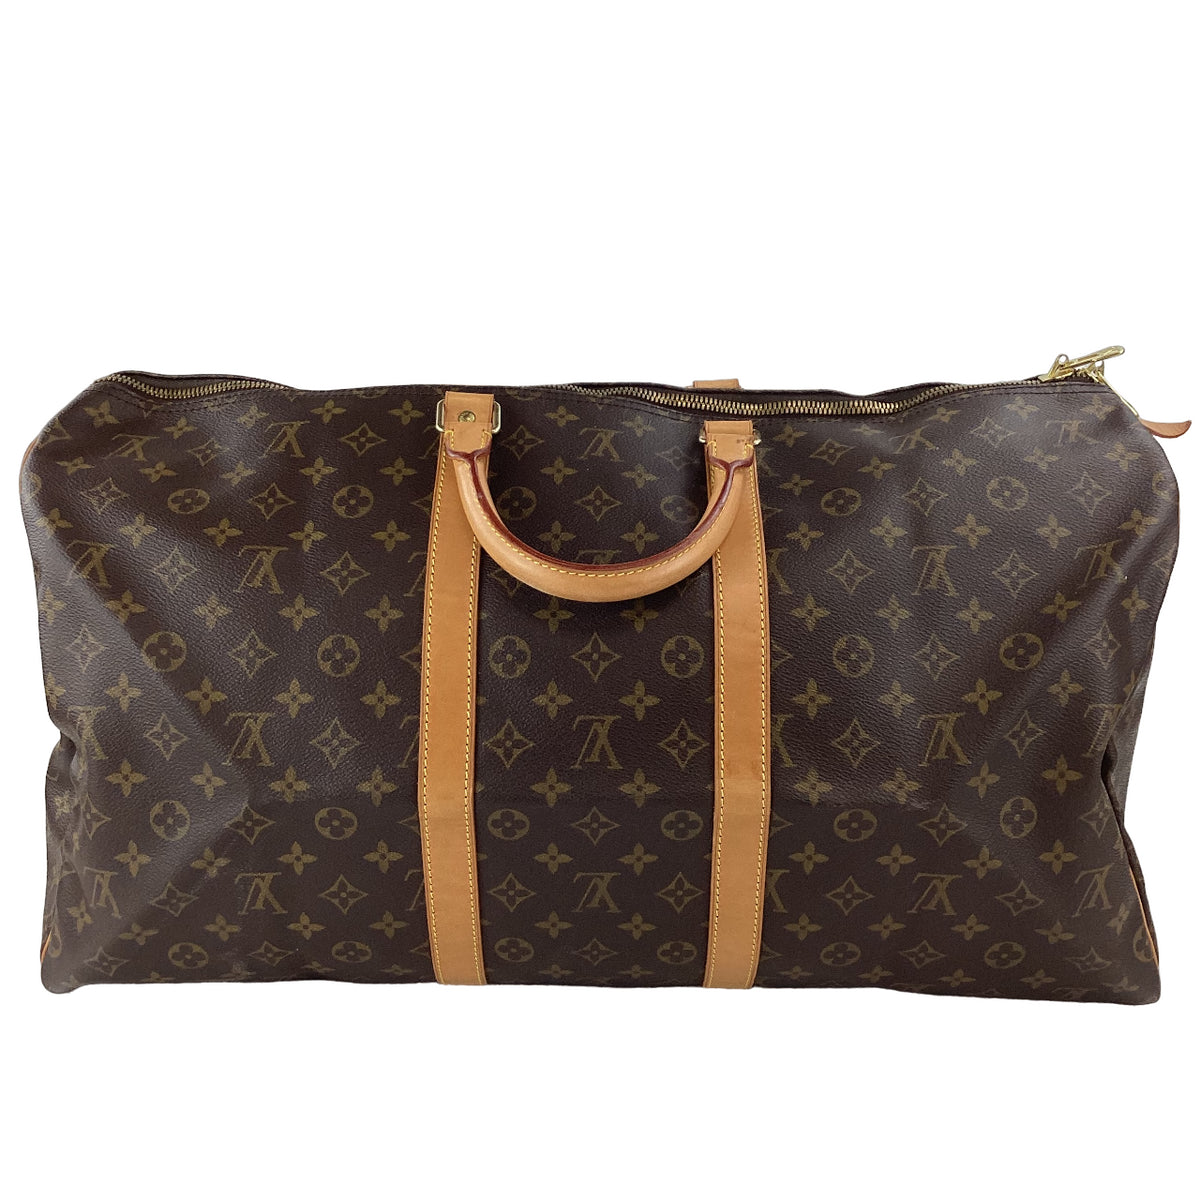 Louis Vuitton Keepall 55 Duffle Bag